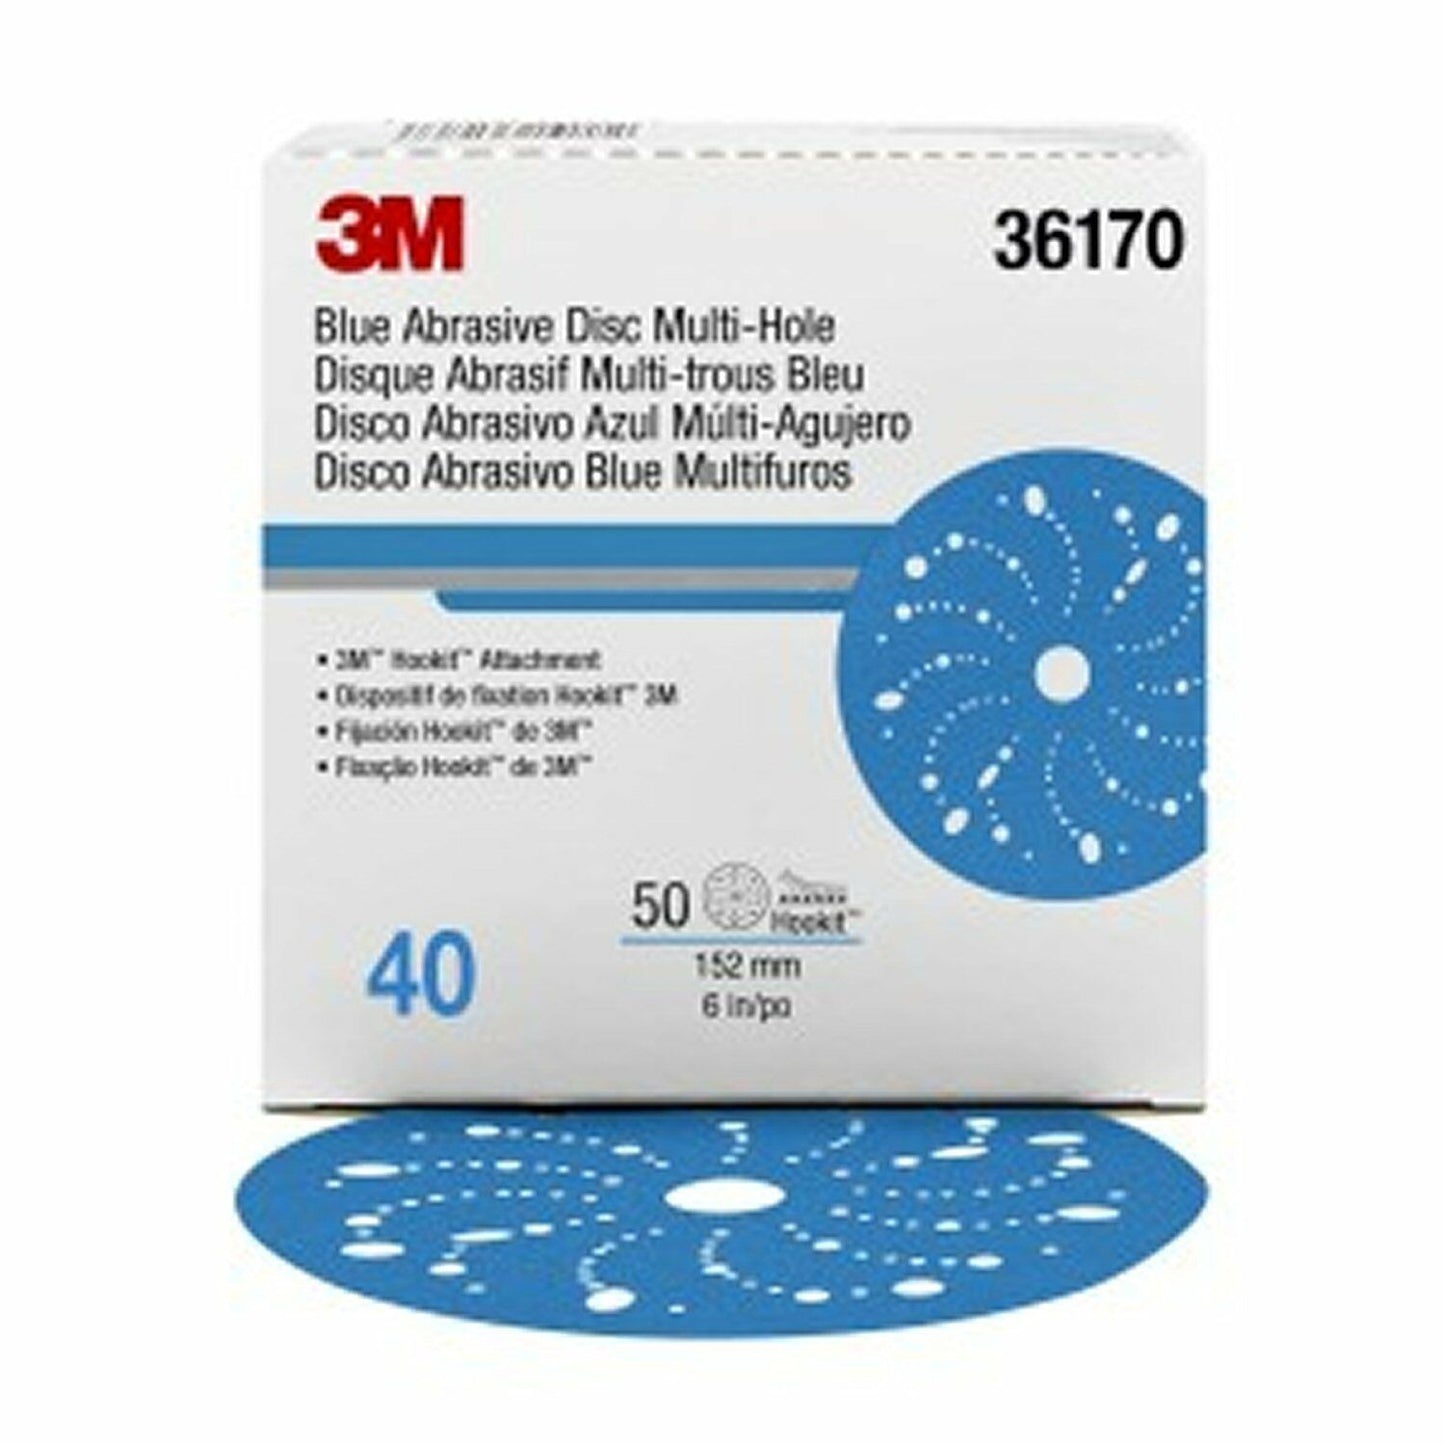 3M Hookit Blue Abrasive Disc Multihole 6 inch 150mm 40G 36170 50 Pack Sandpaper